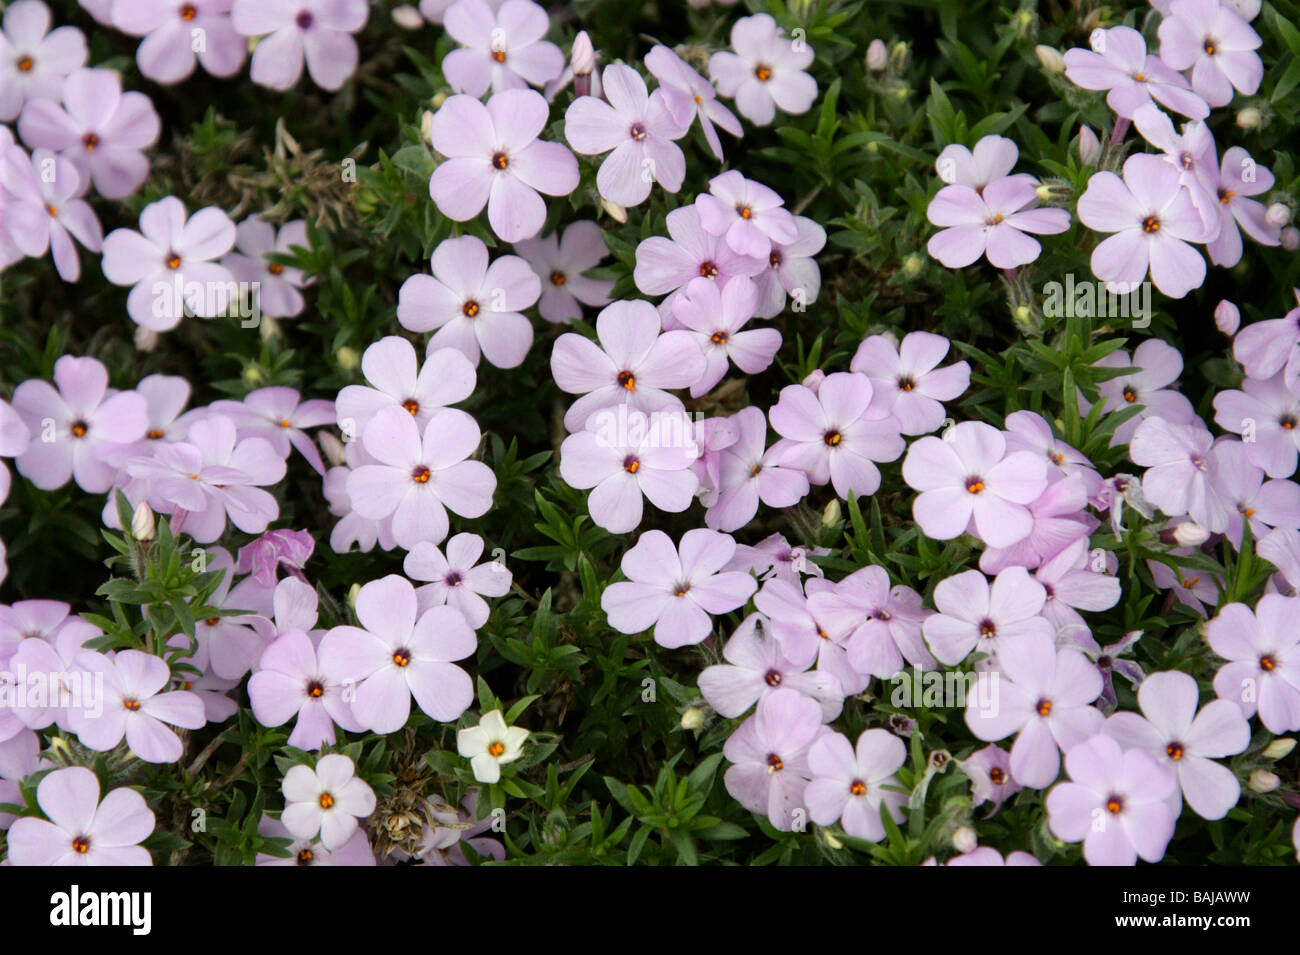 Lo spunto da fermi, Phlox Phlox douglasii rosea, Polemoniaceae Foto Stock